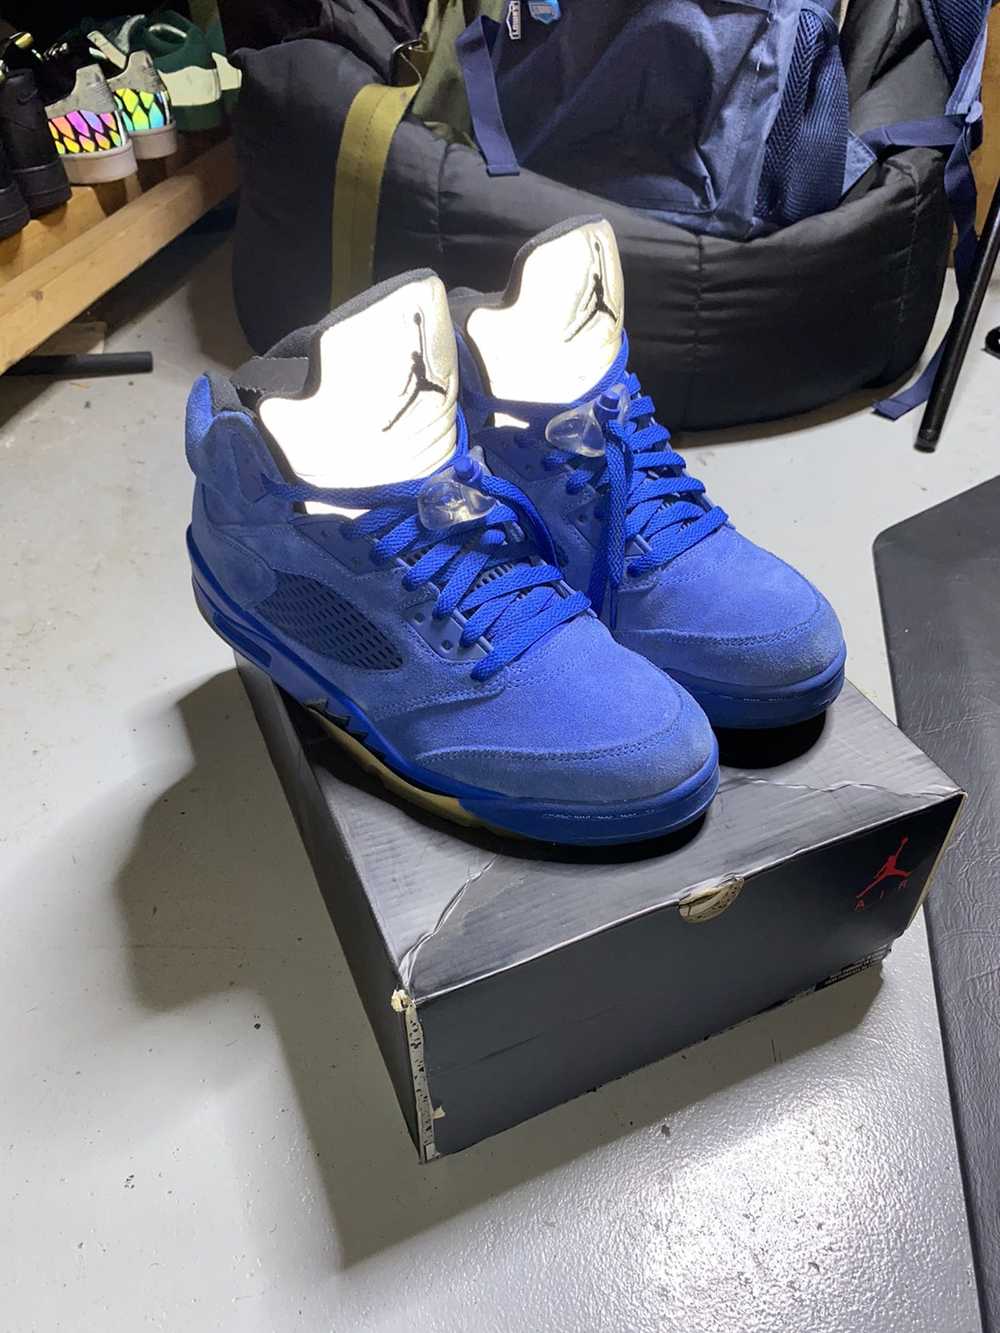 Jordan Brand Jordan 5 blue suede - image 1